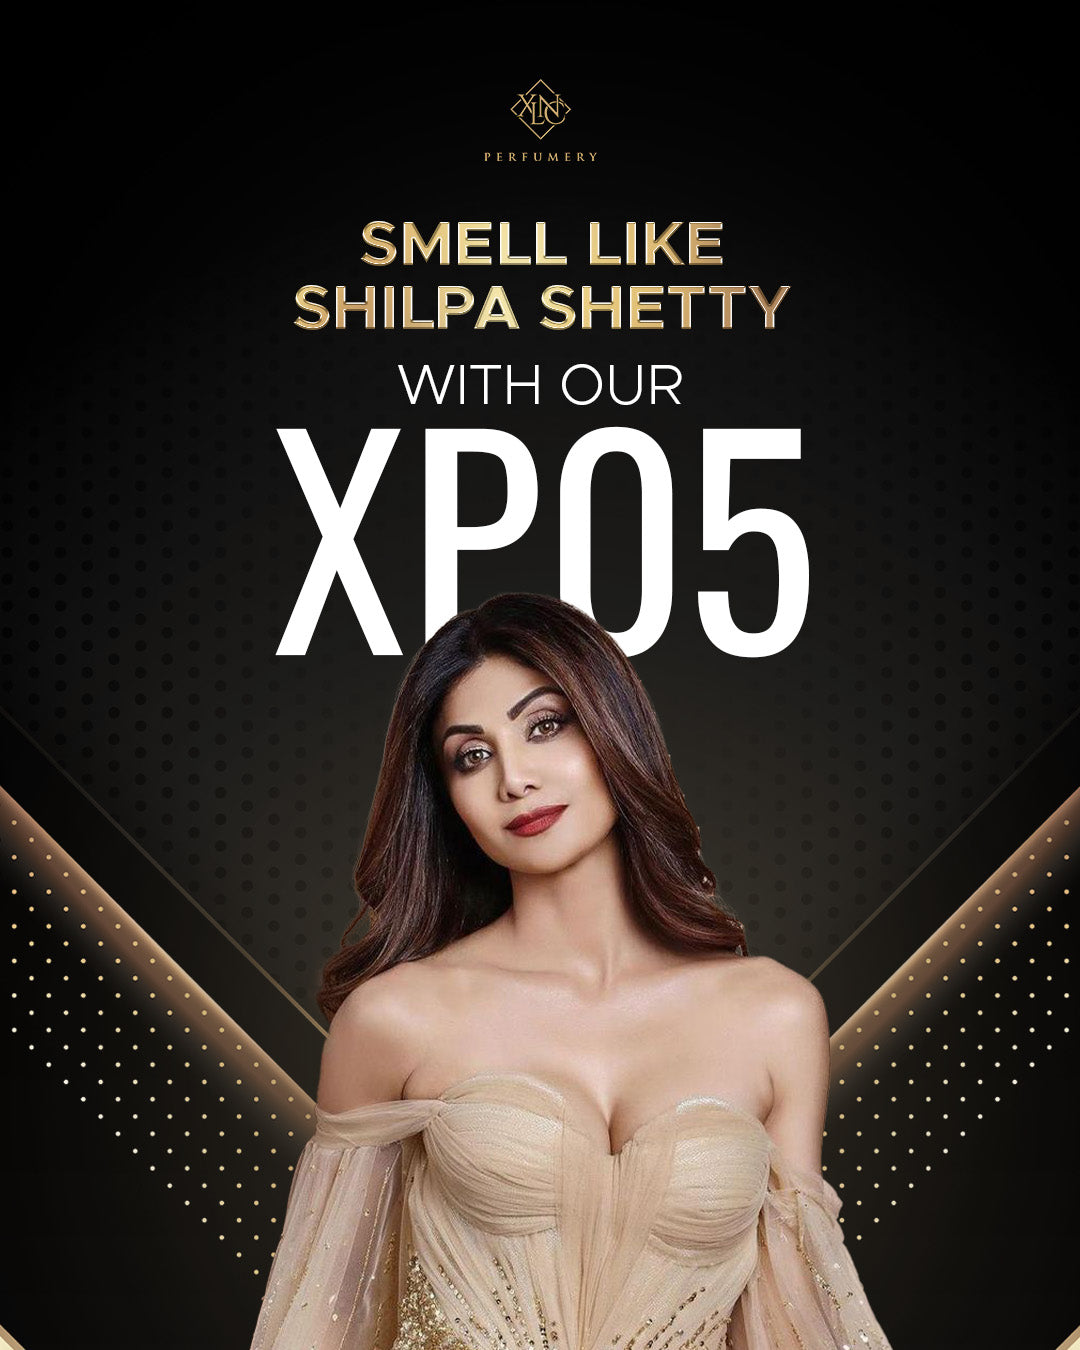 XP05 (Inspired by Nish@ne Wul0ng Cha) Worn by Shilpa Shetty